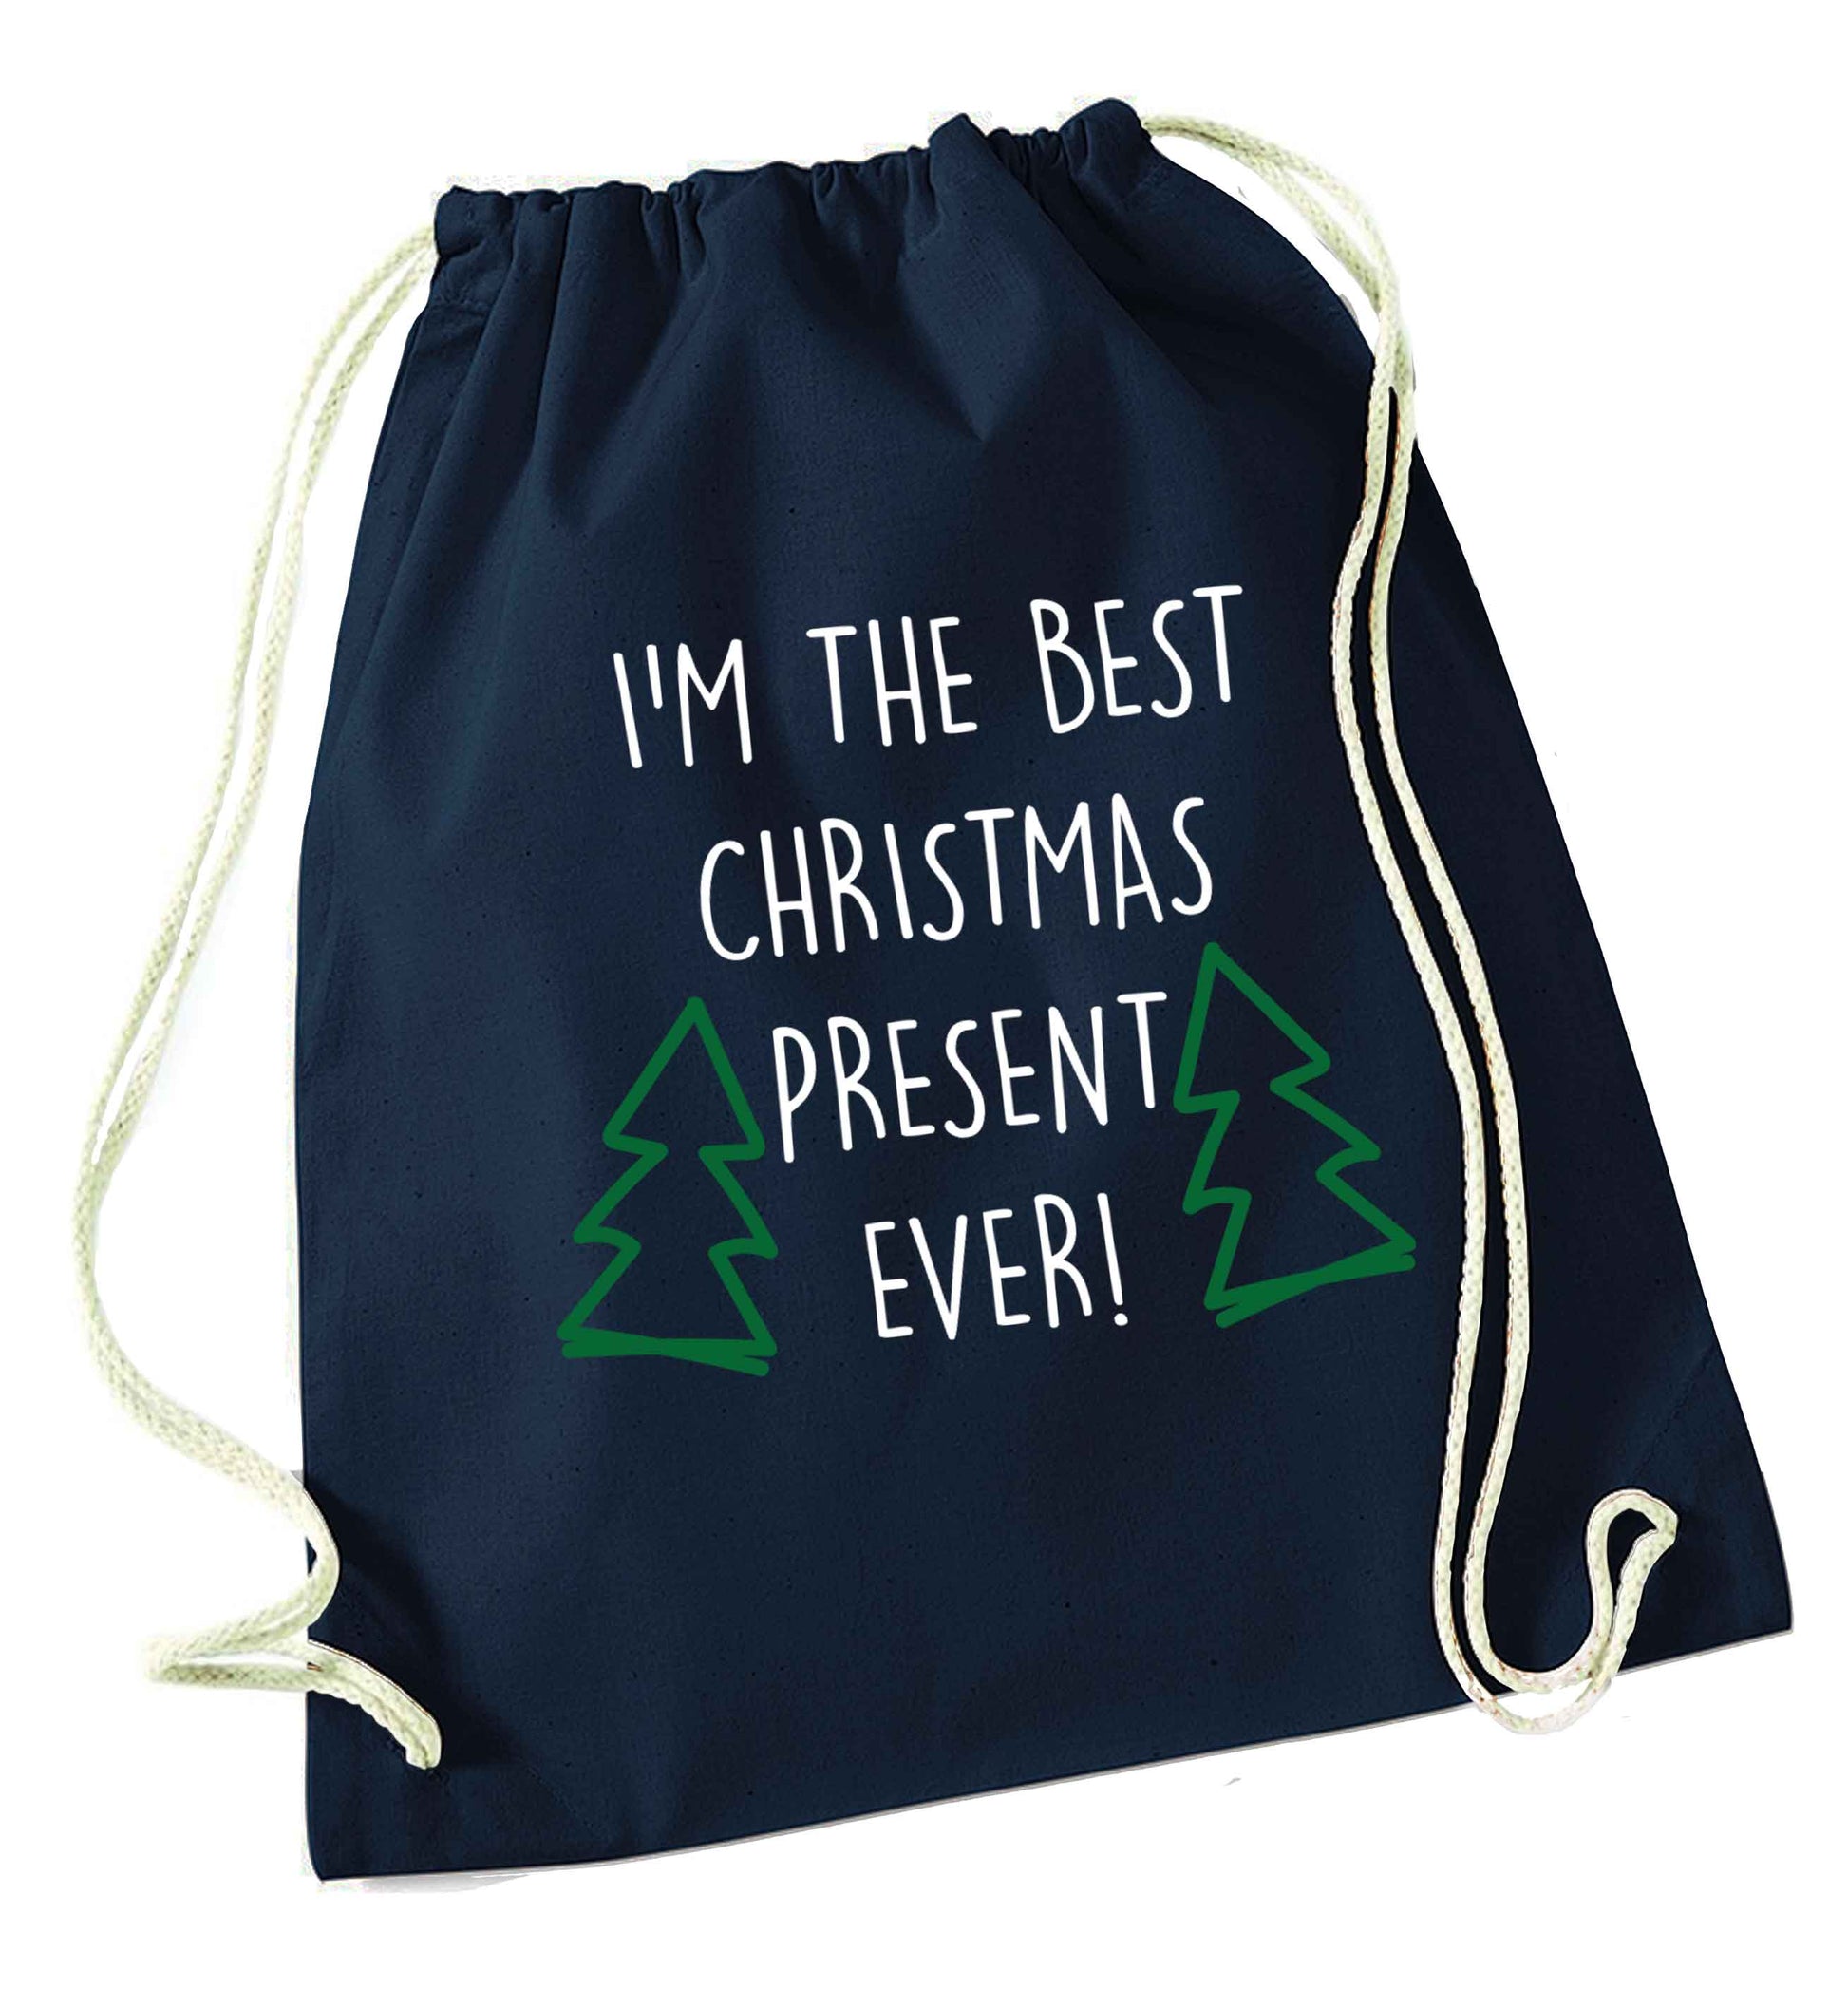 I'm the best Christmas present ever navy drawstring bag